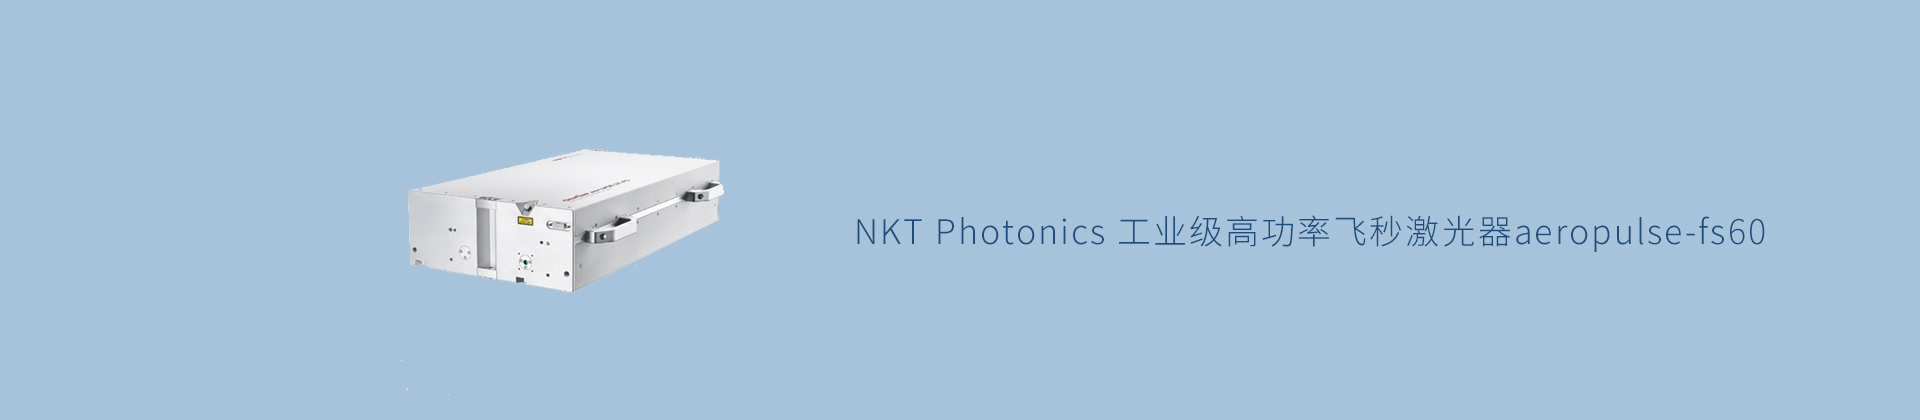 NKT Photonics 工业级高功率飞秒激光器aeropulse-fs60